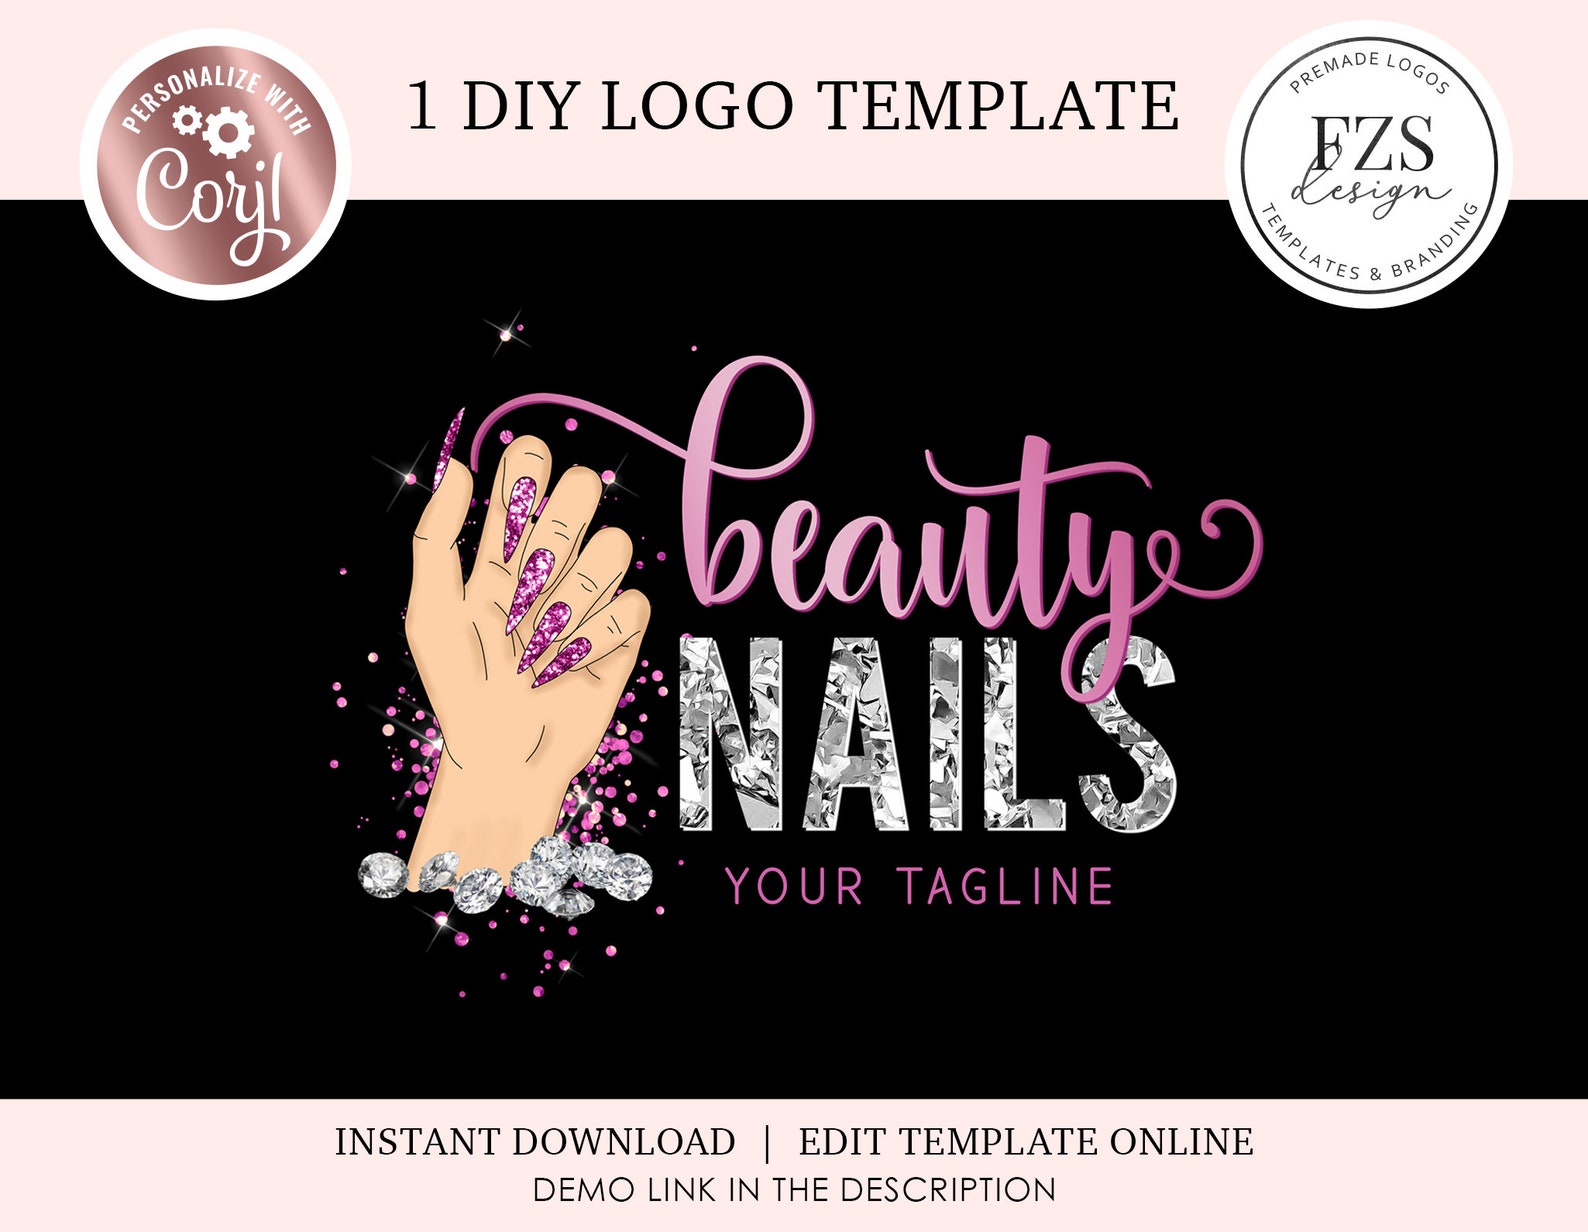 2. Creative Nail Designer Logo - wide 9